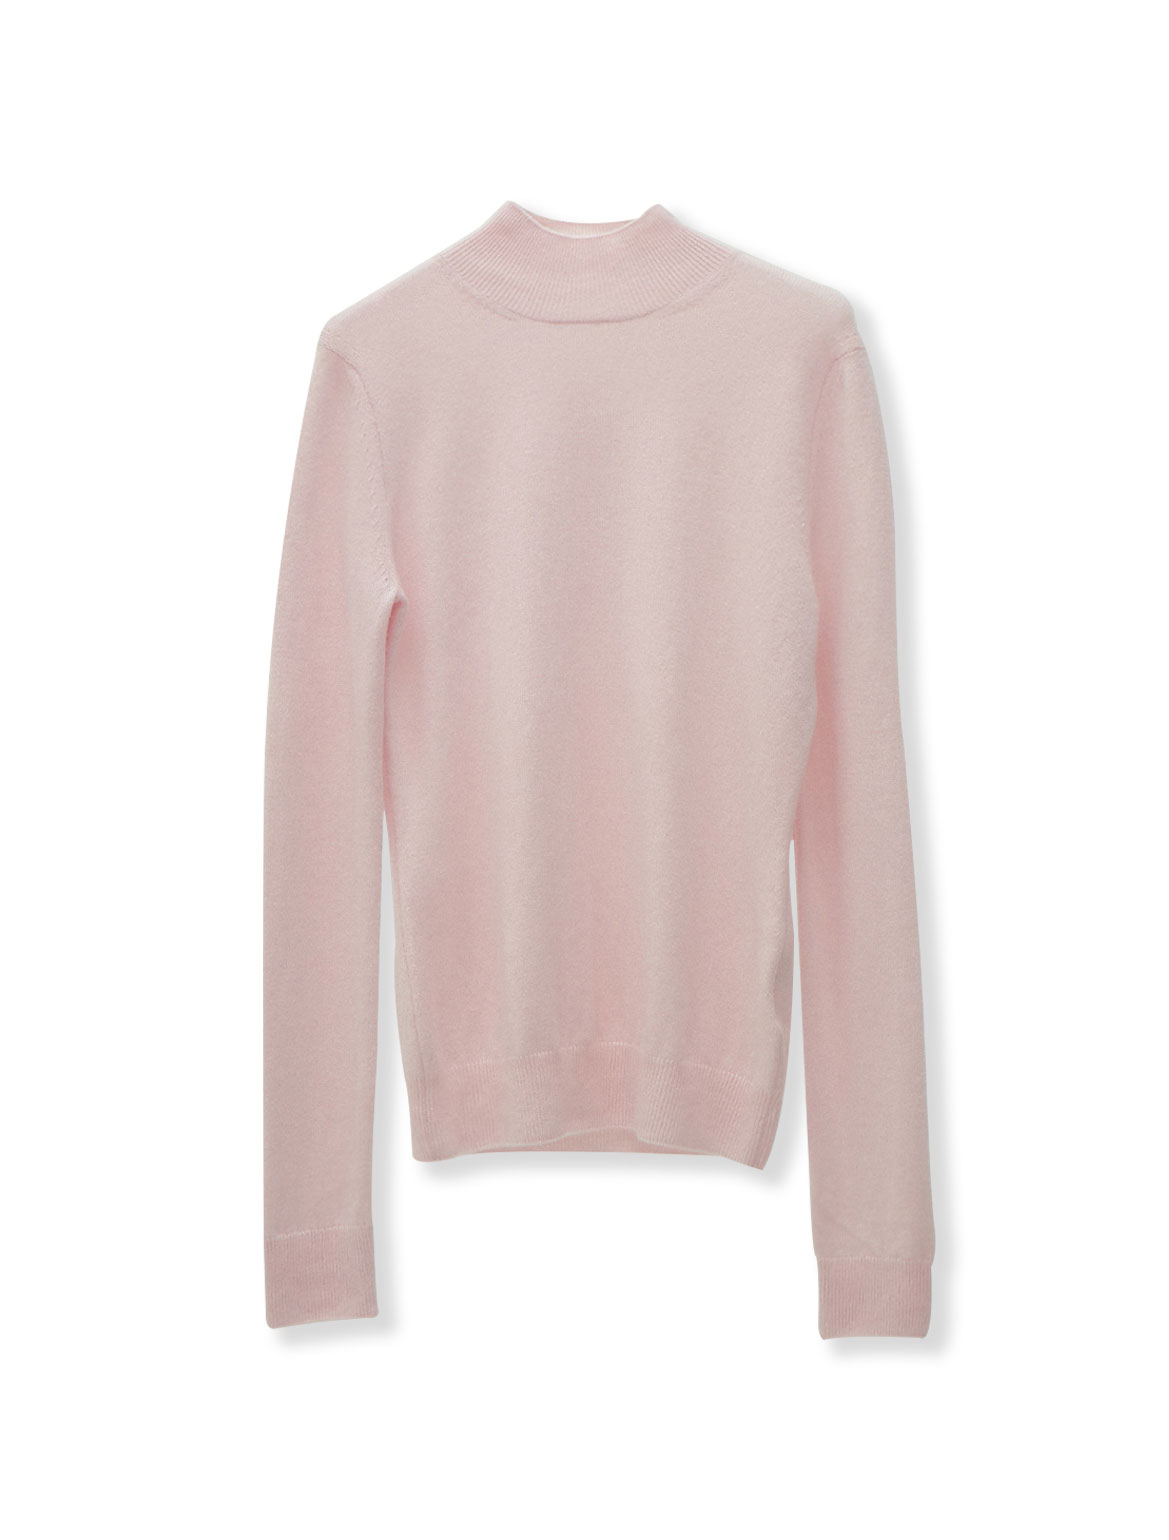 Cashmere Turtleneck Sweater (Pink)